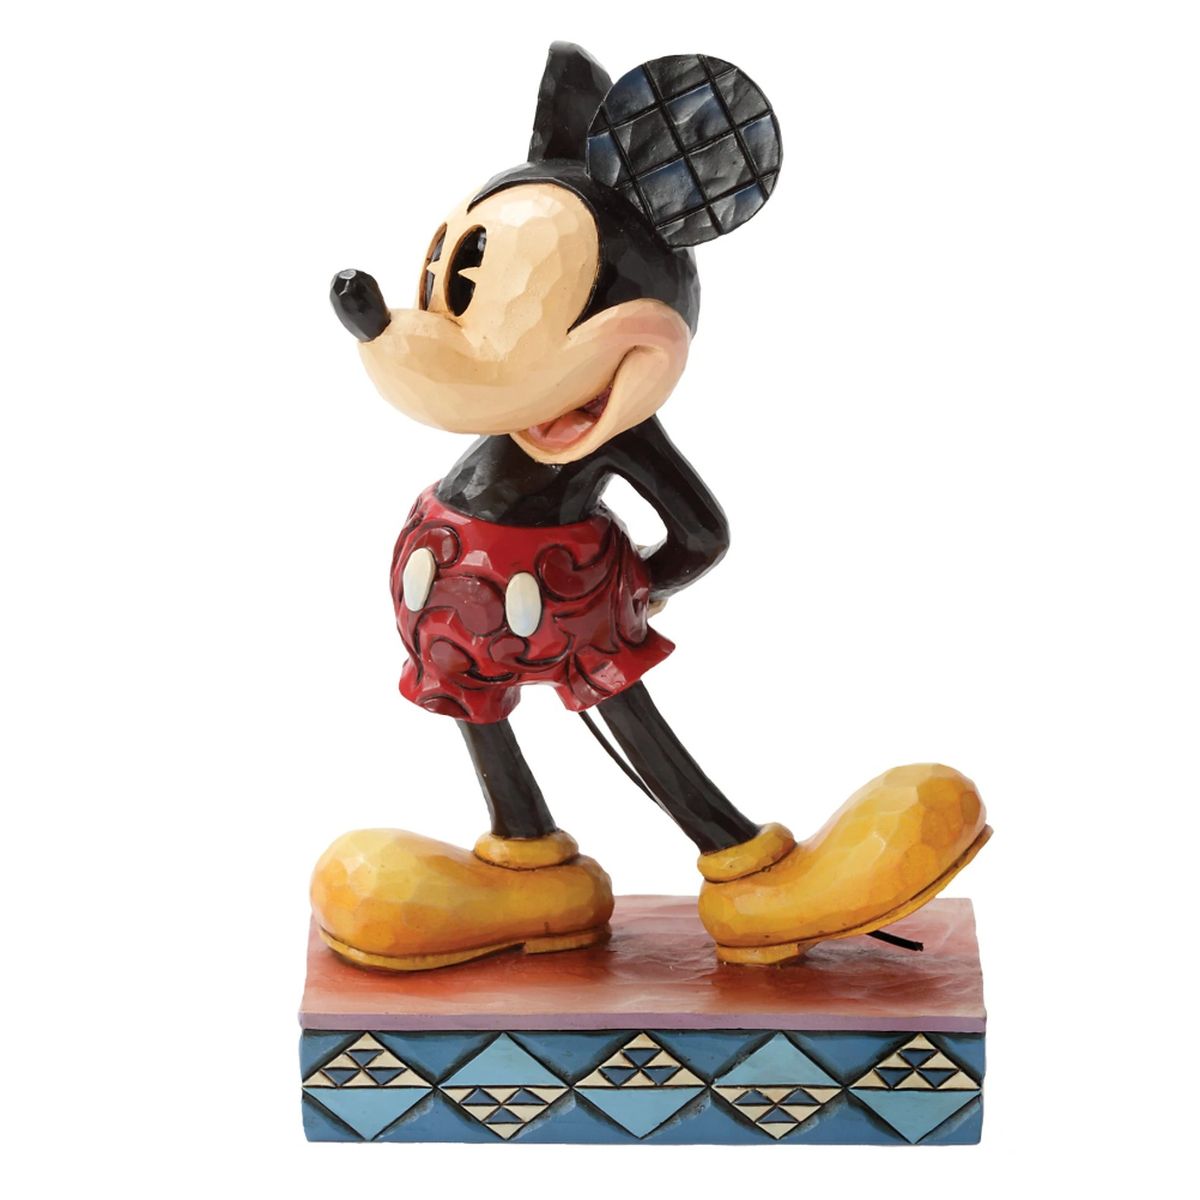 The Original - Mickey Mouse Personaility Pose Figurine